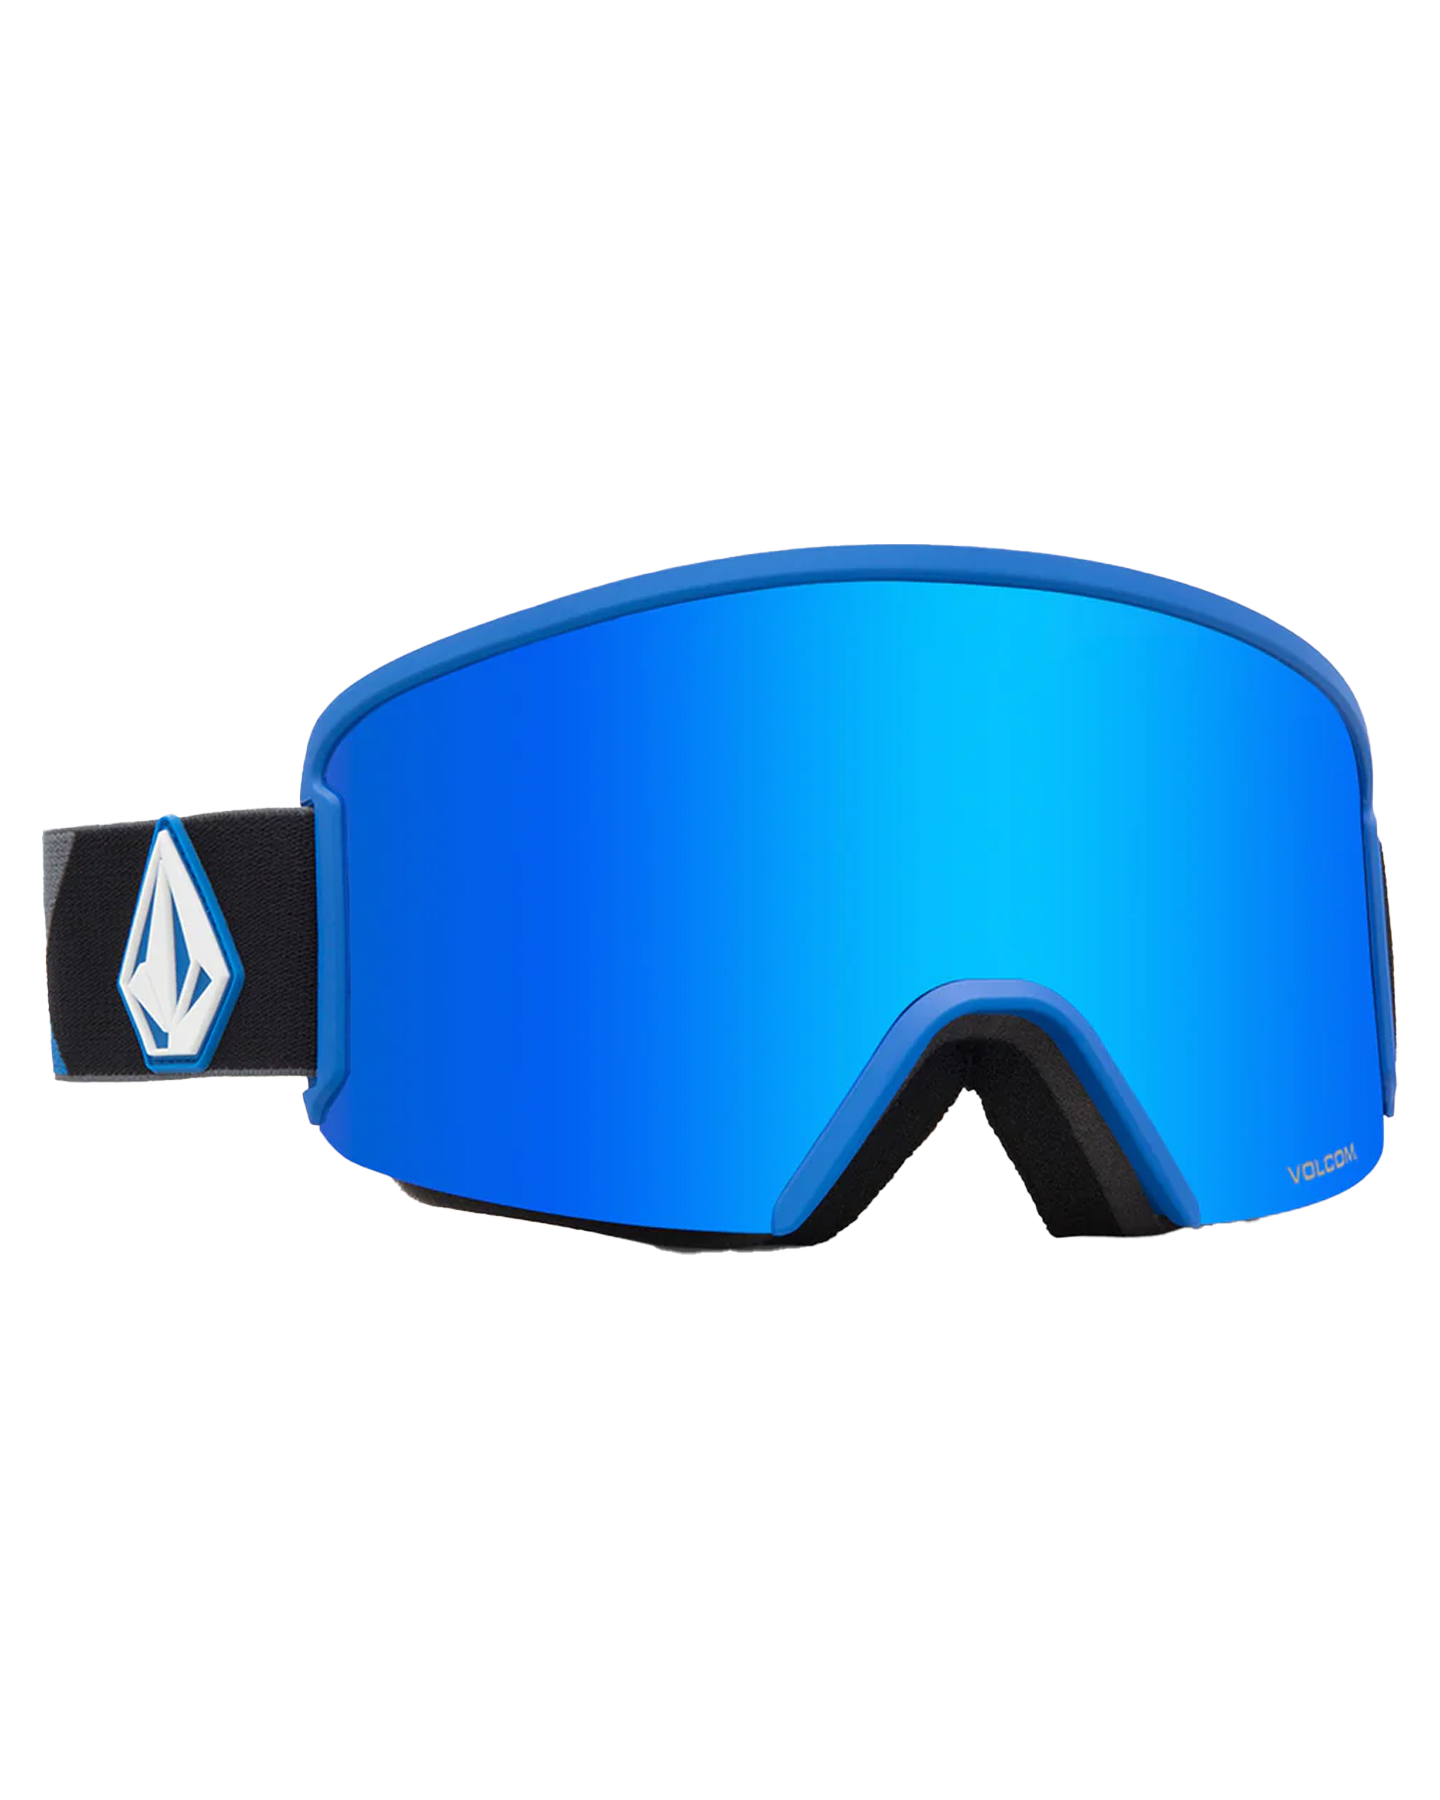 Volcom Garden Blue Blue Goggles - Blue Chrome Snow Goggles - Mens - Trojan Wake Ski Snow